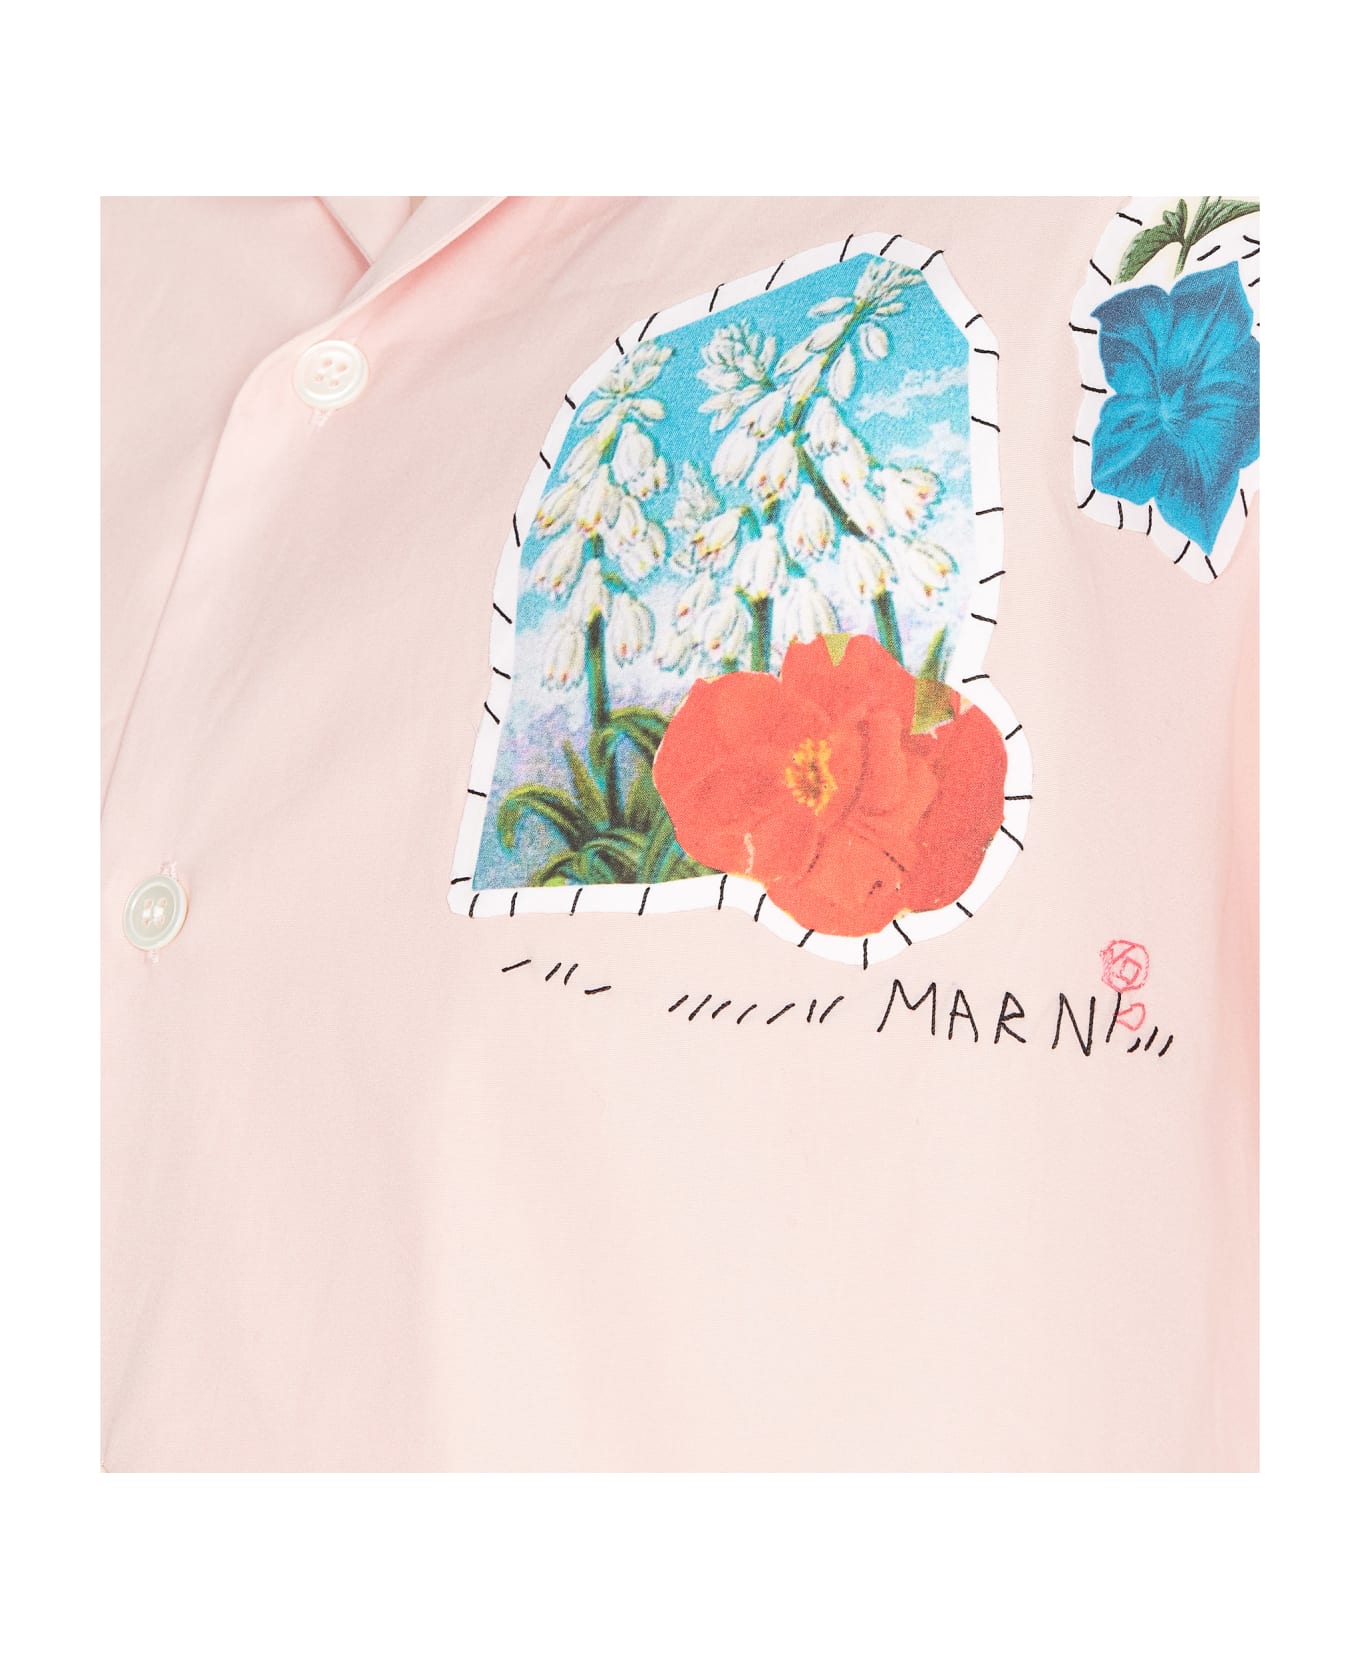 Marni Crop Shirt - Pink